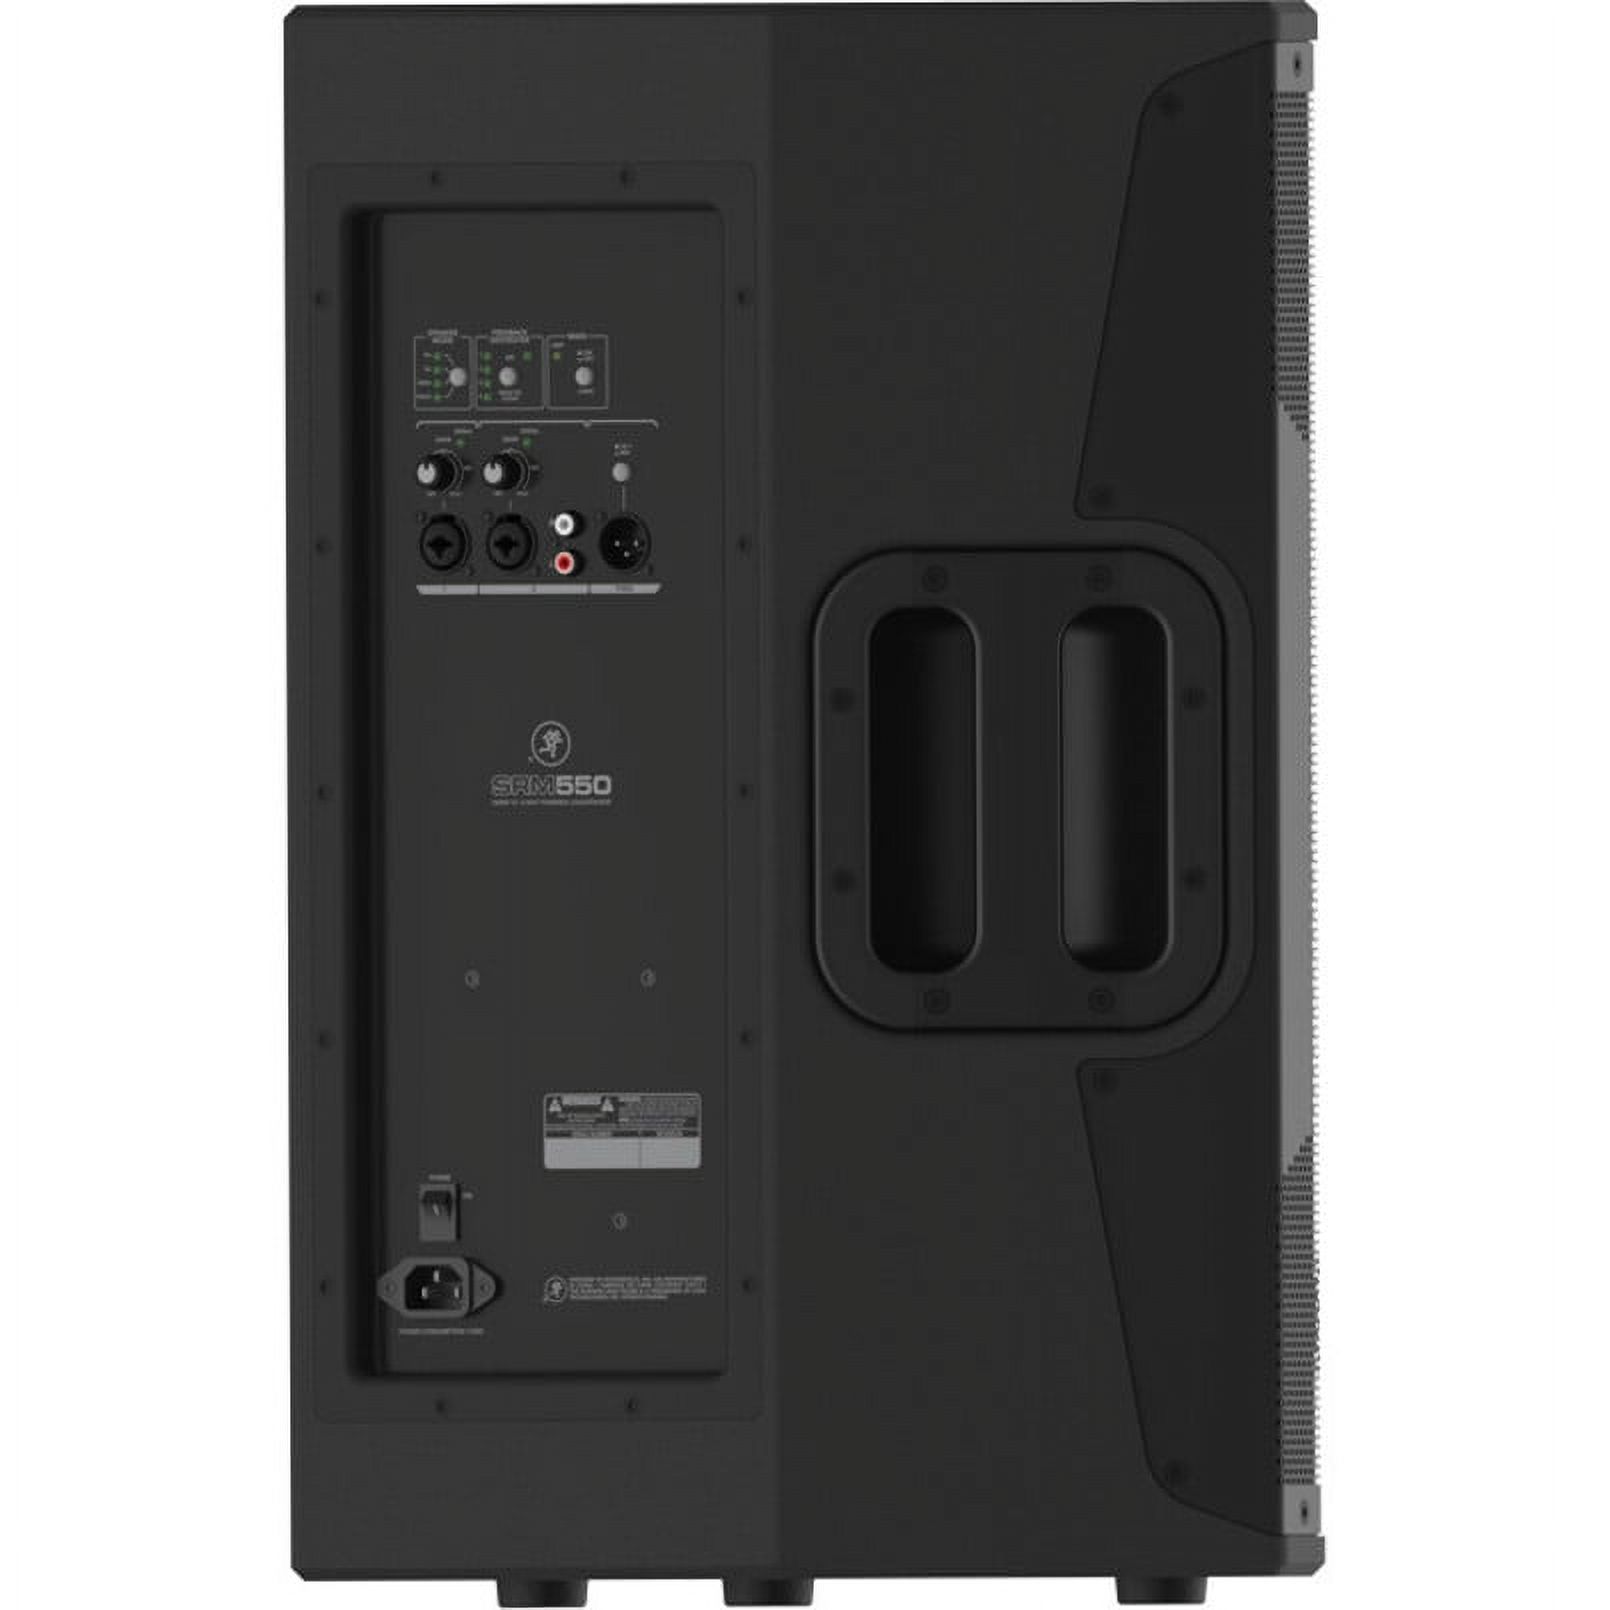 Mackie SRM550 12" 1600W 2-Way High-Definition Powered Loudspeaker - image 2 of 6